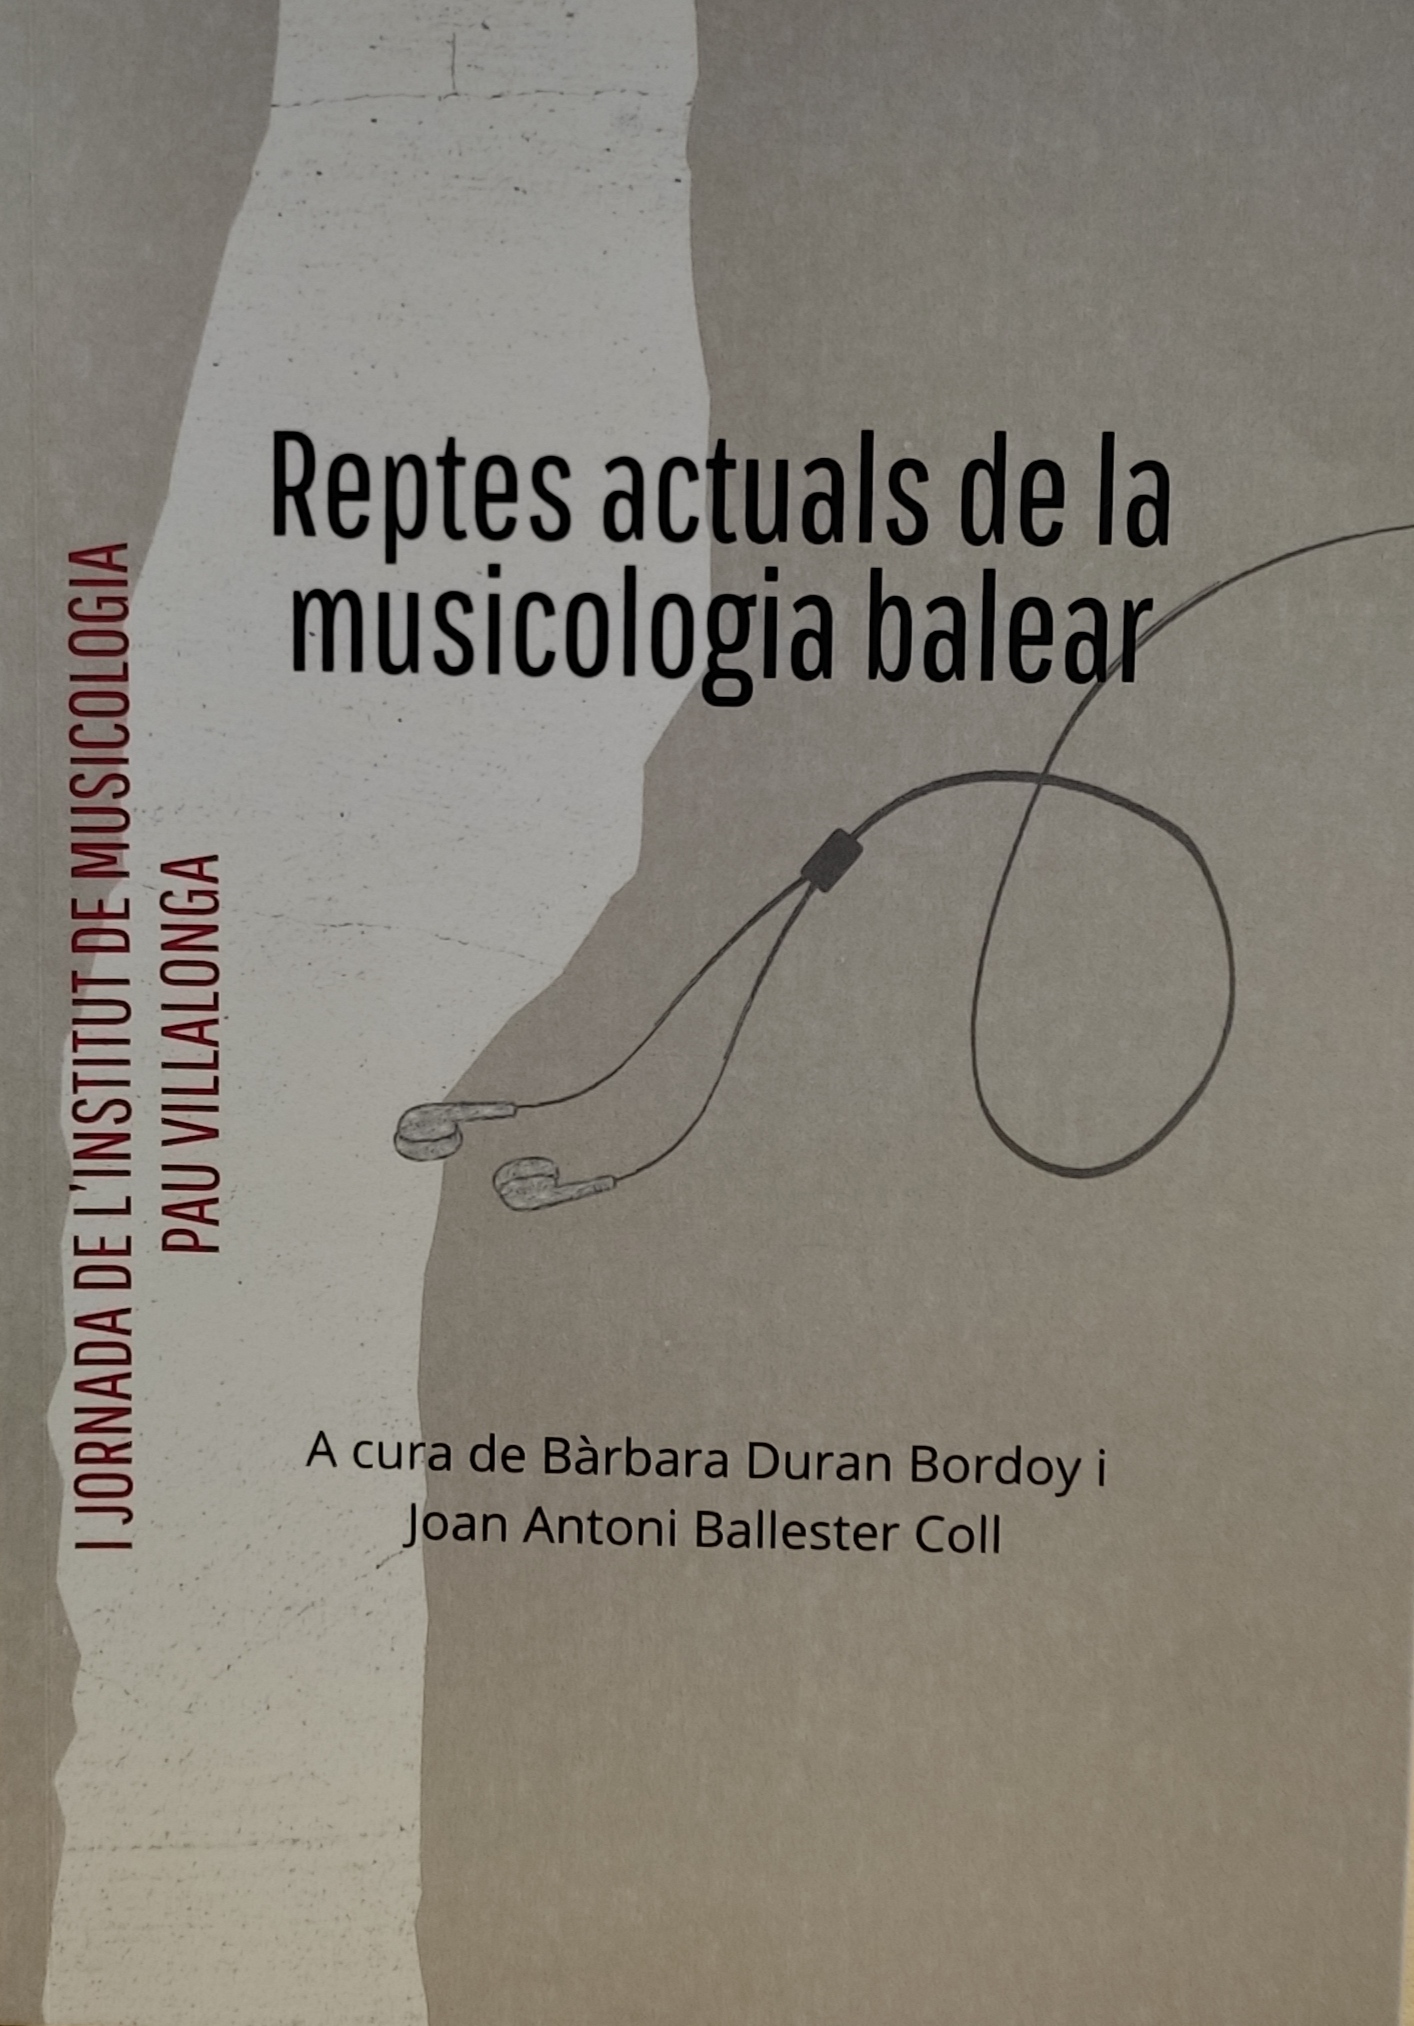 Imagen de portada del libro Reptes actuals de la musicologia balear